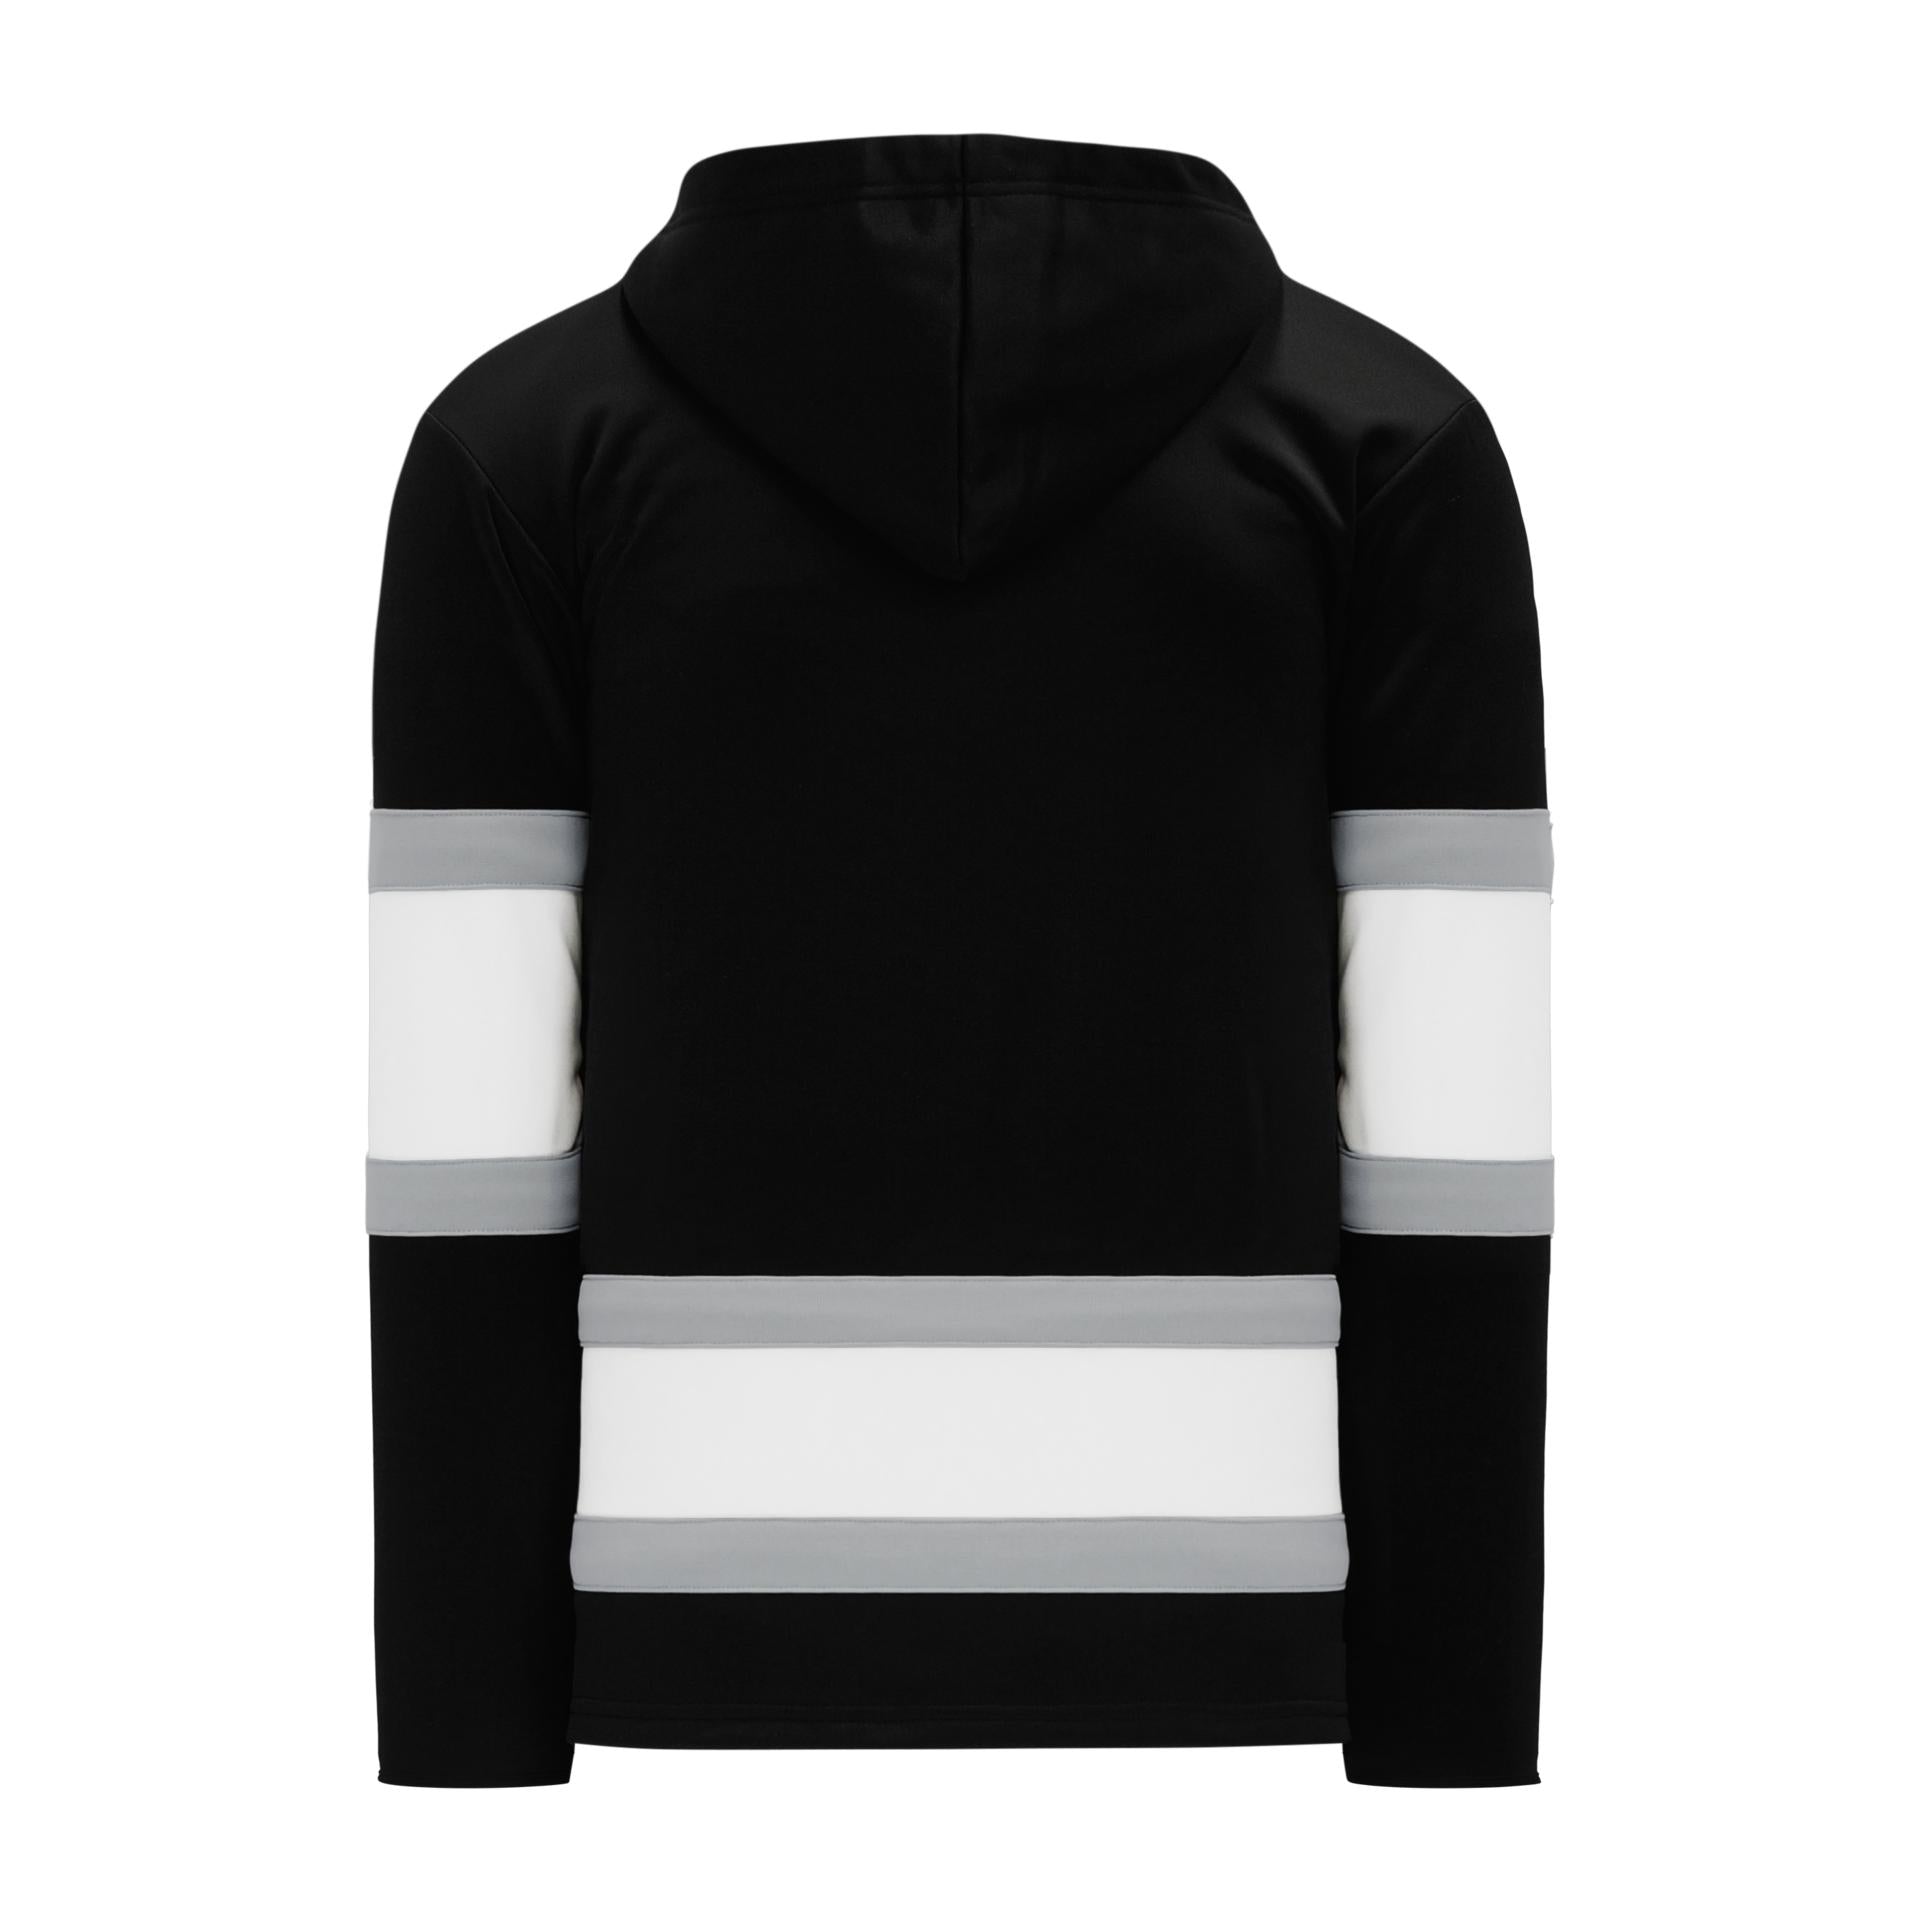 A1850-376 Dallas Stars Blank Hockey Lace Hoodie Sweatshirt Adult XS